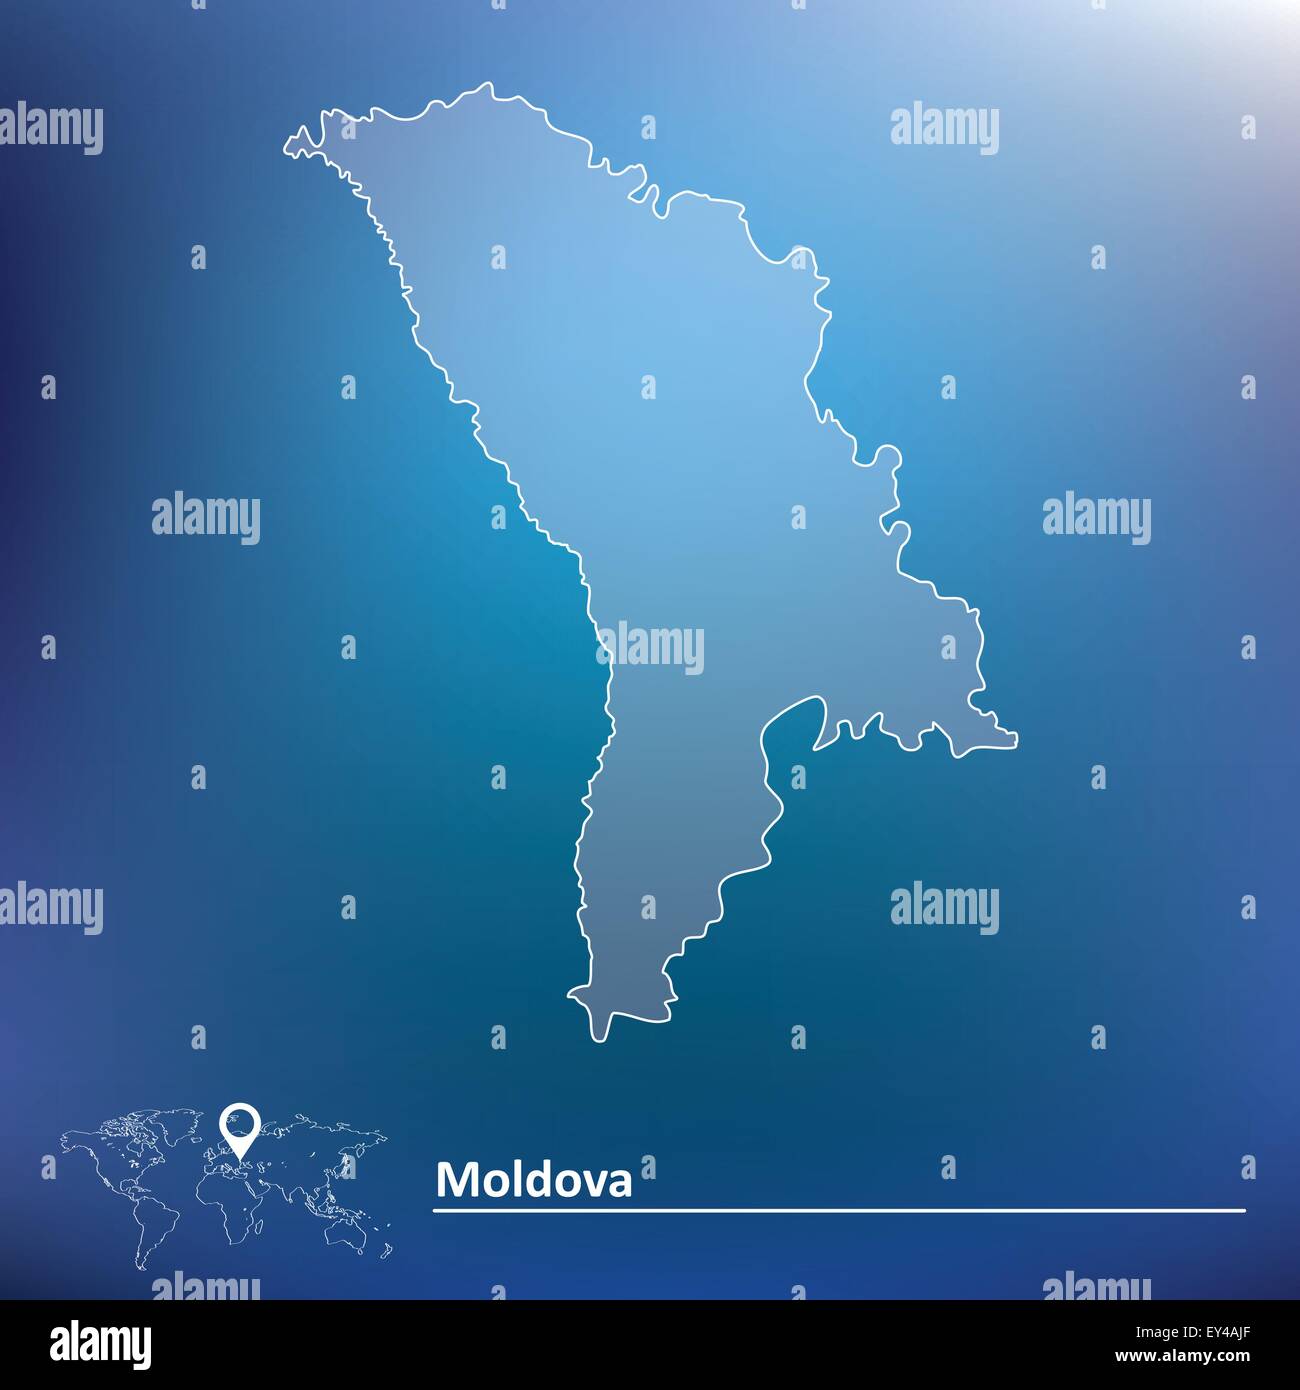 Map of Moldova - vector illustration Stock Vector